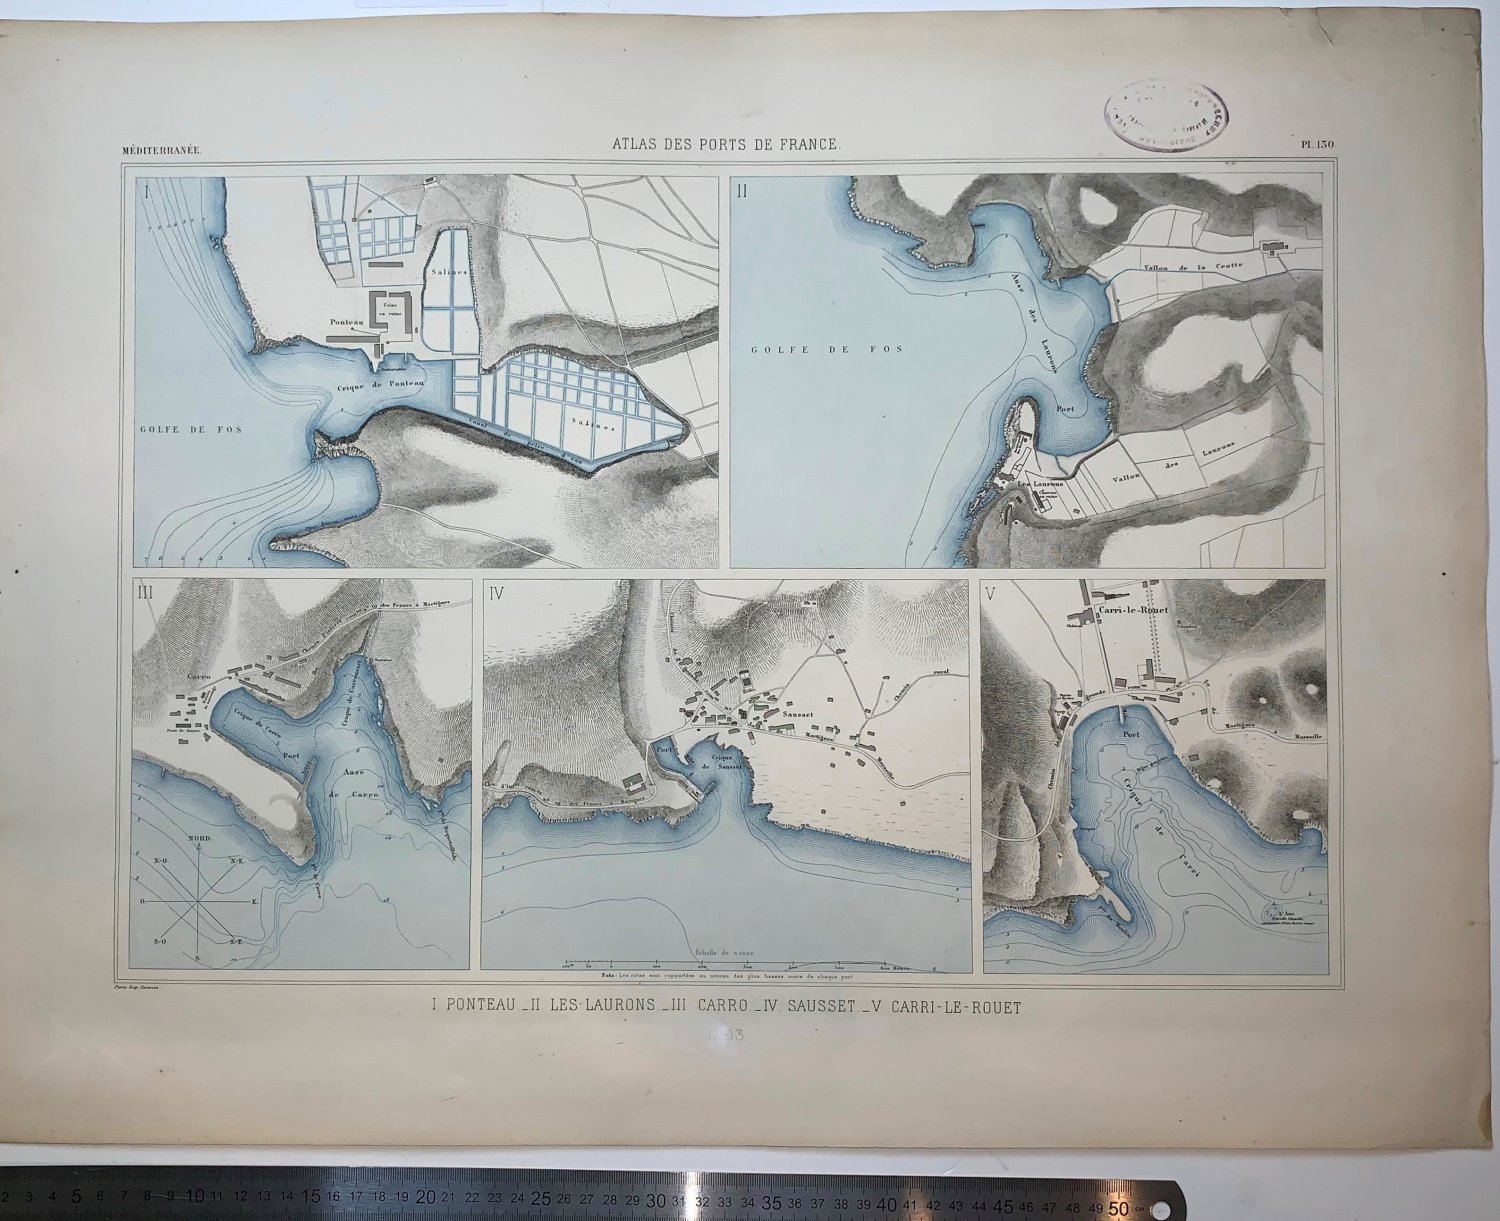 Atlas des ports de France. I. Ponteau. II. Les Laurons. III. Carro. IV. Sausset. V. Carri-la-Rouet